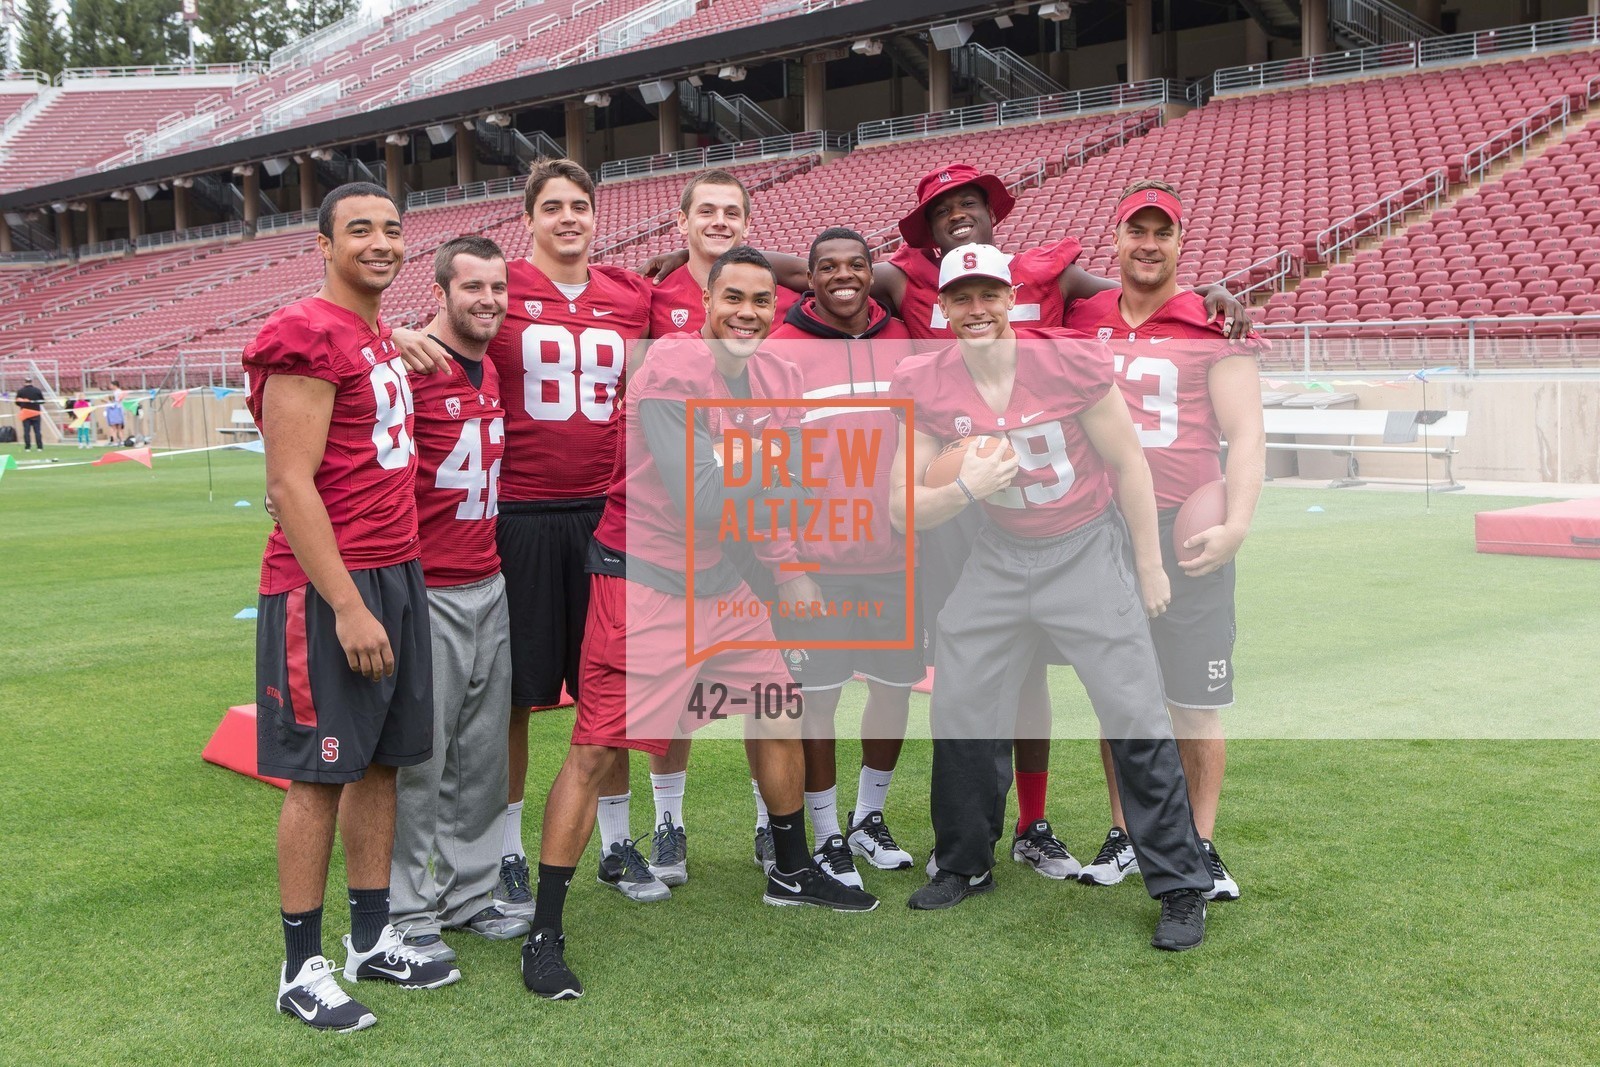 Stanford Football Team, Photo #42-105